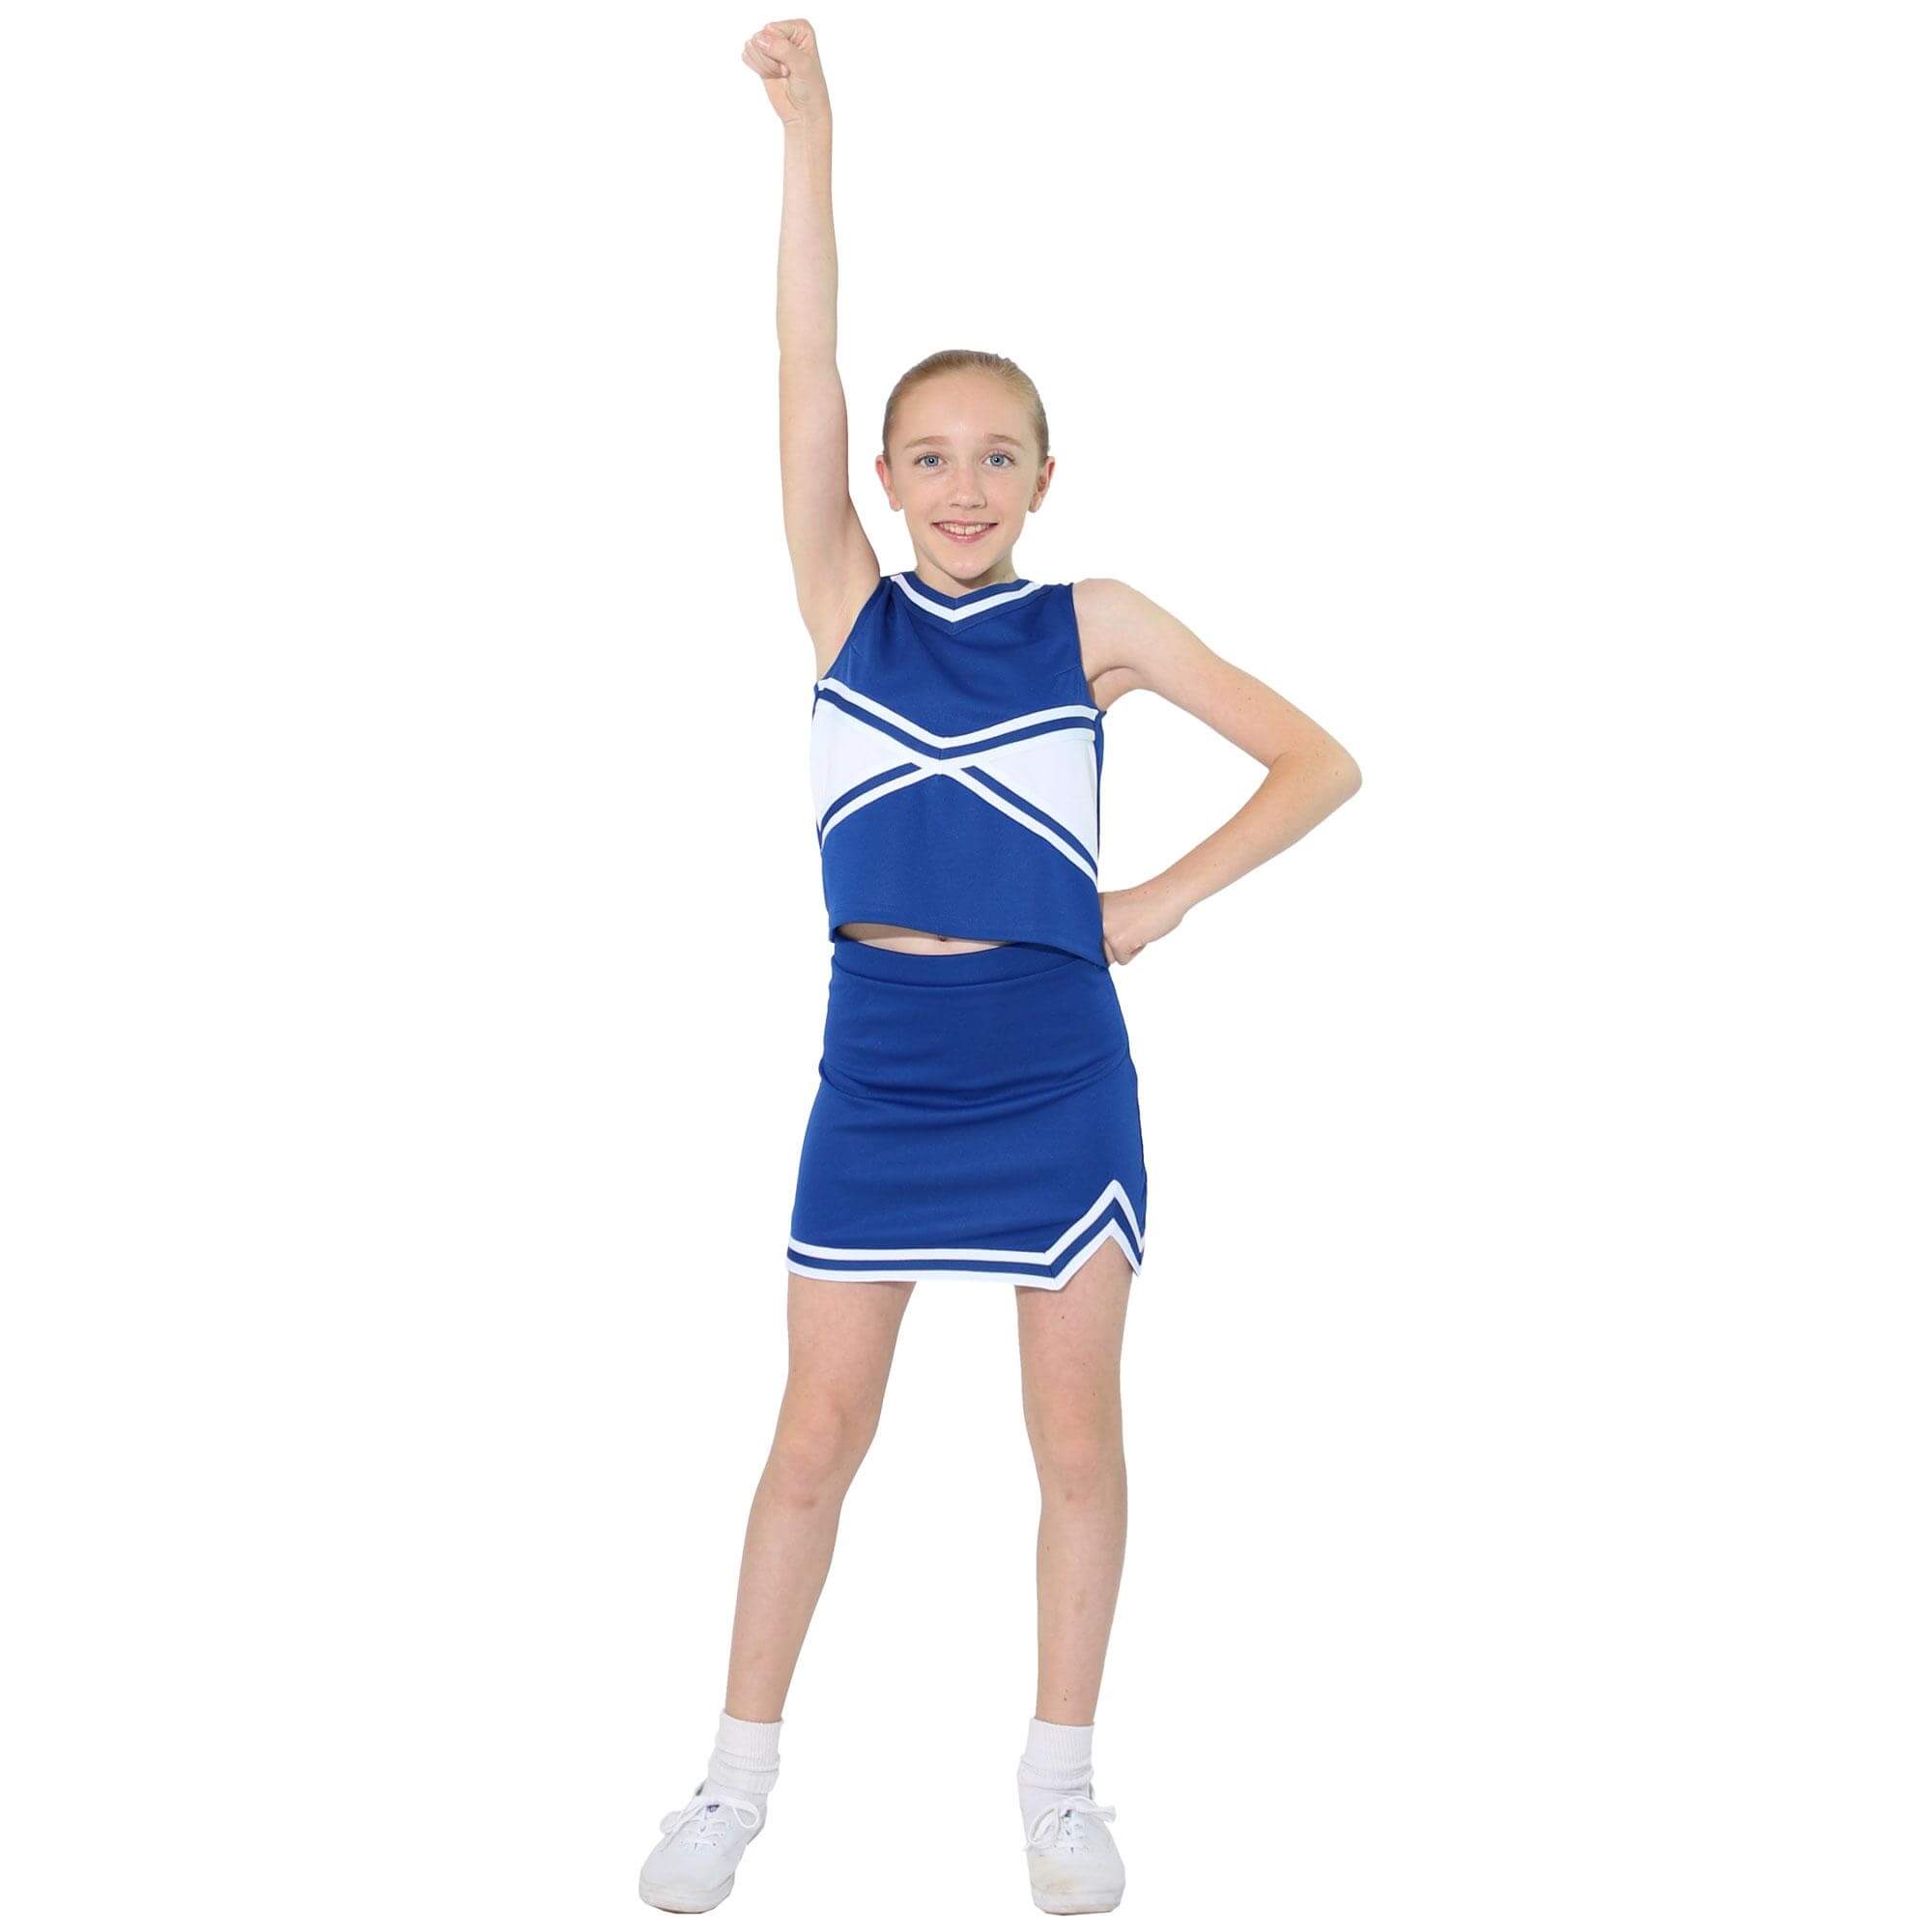 Danzcue Child 2-Color Kick Sweetheart Cheerleaders Uniform Shell Top - Click Image to Close